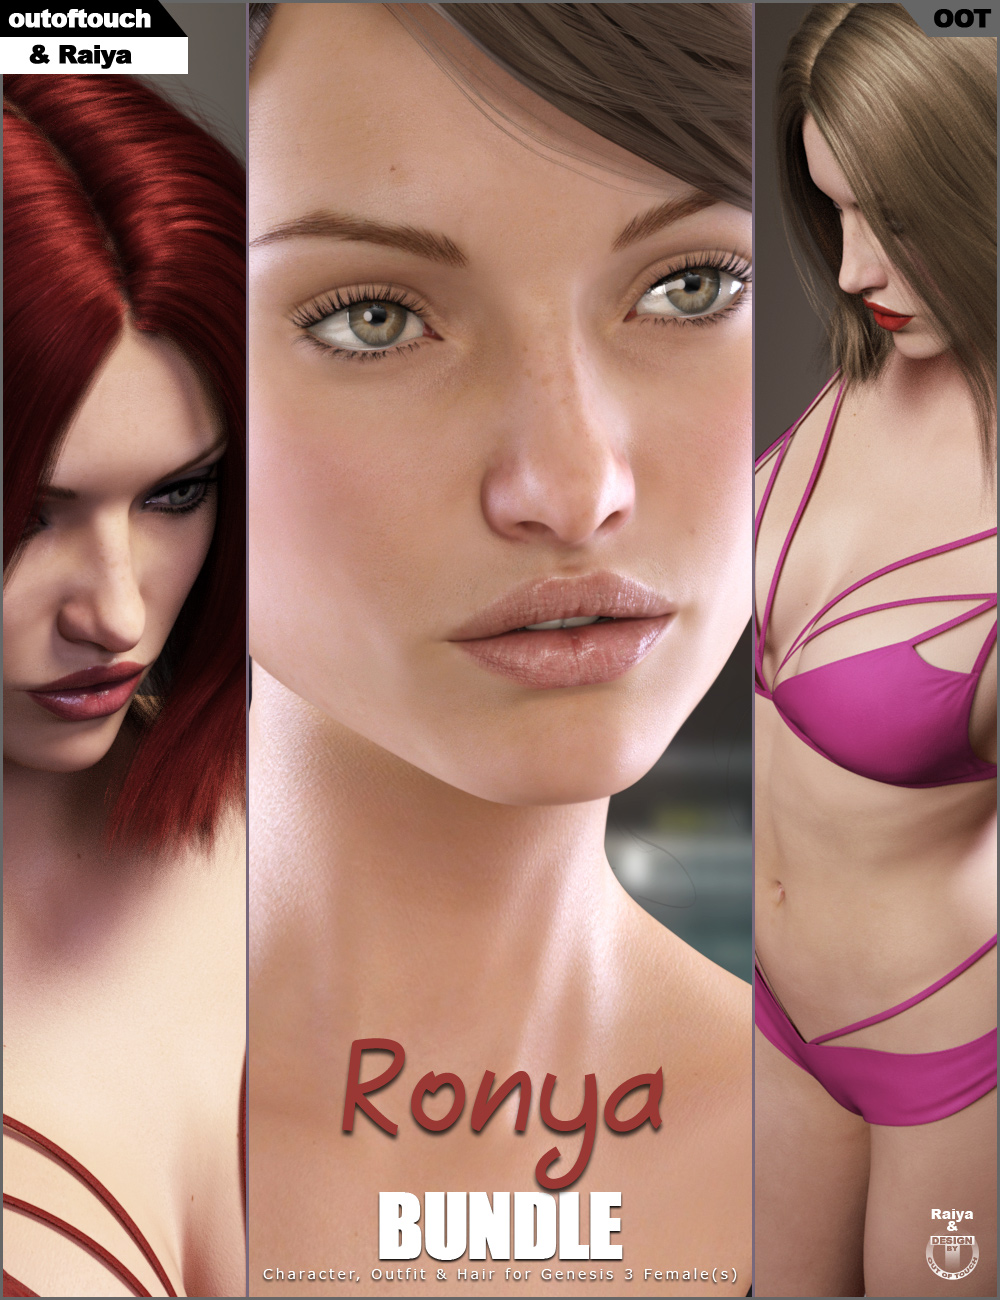 Ronya Bundle by: outoftouchRaiya, 3D Models by Daz 3D